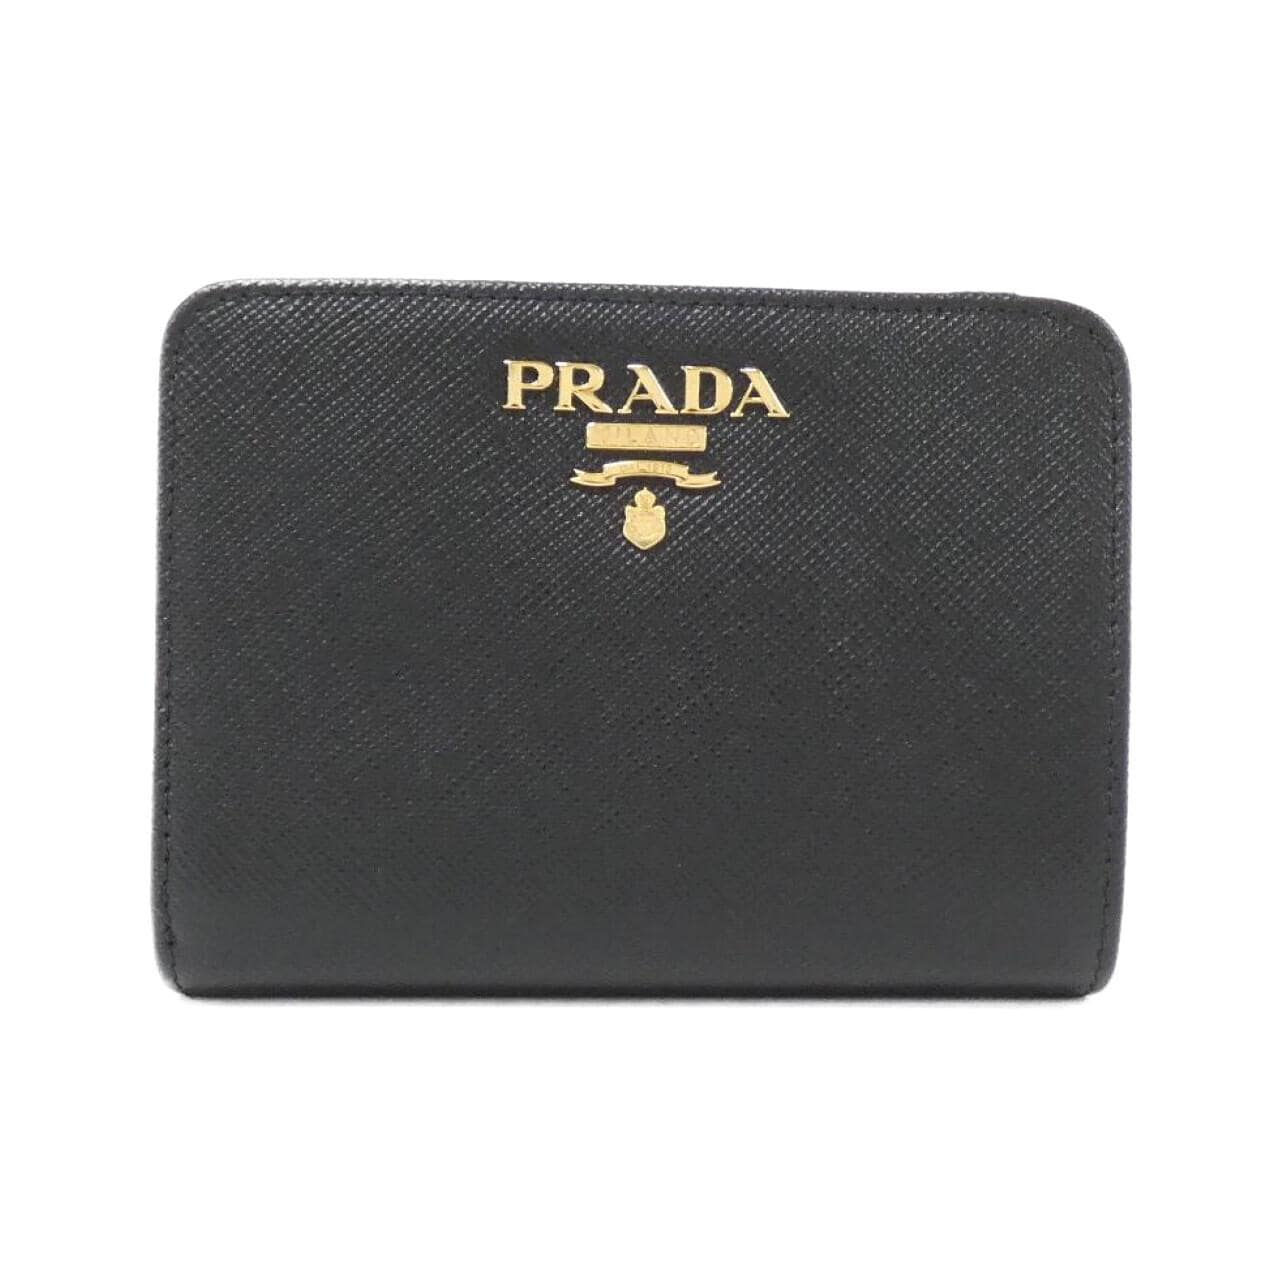 prada 1ML018 wallet